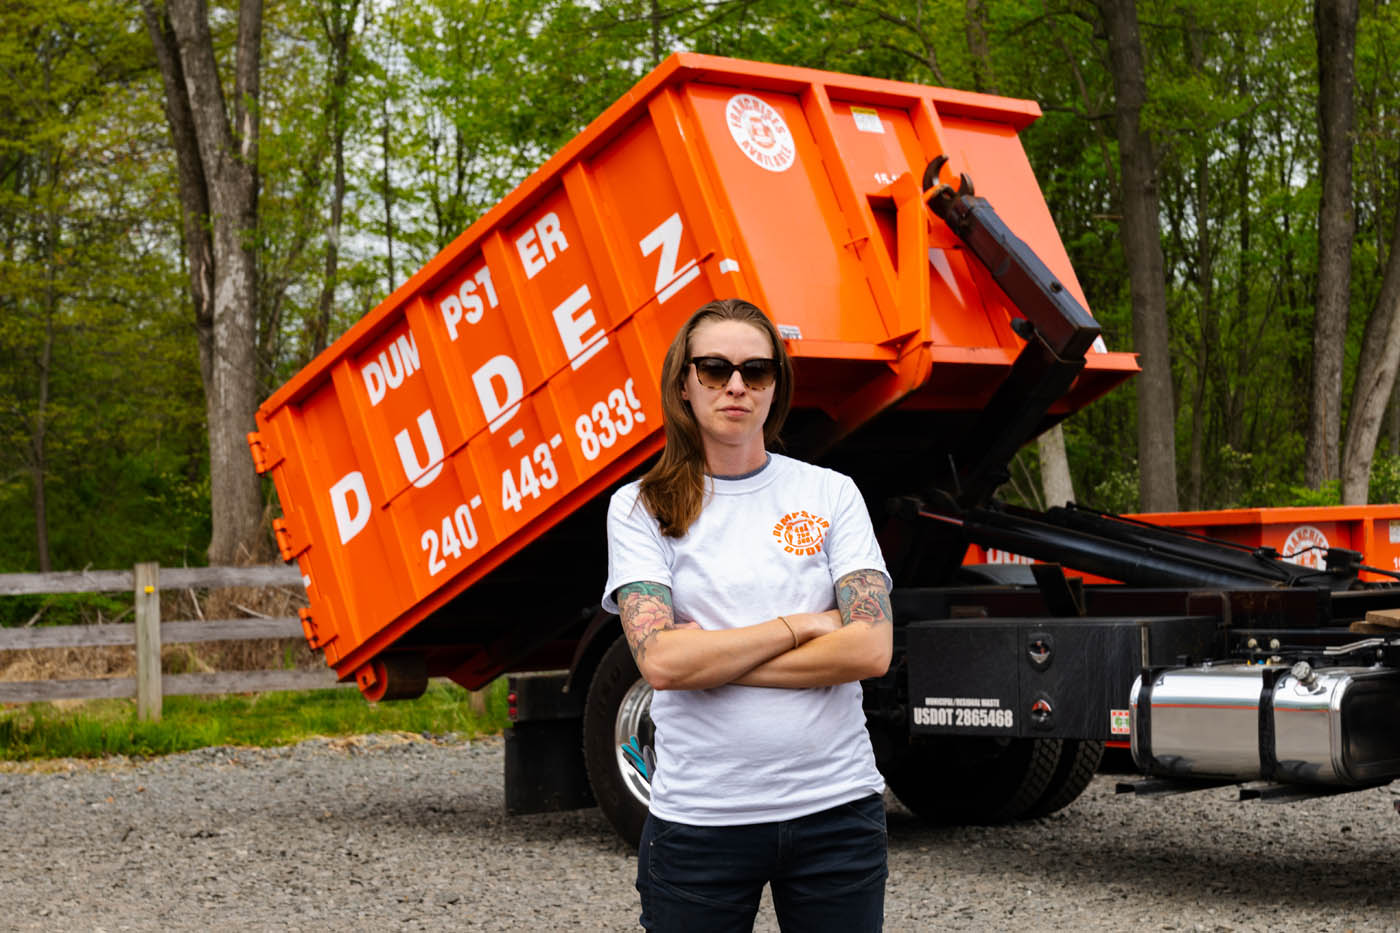 A Dumpster Dudez employee standing in front of an orange dumpster truck.